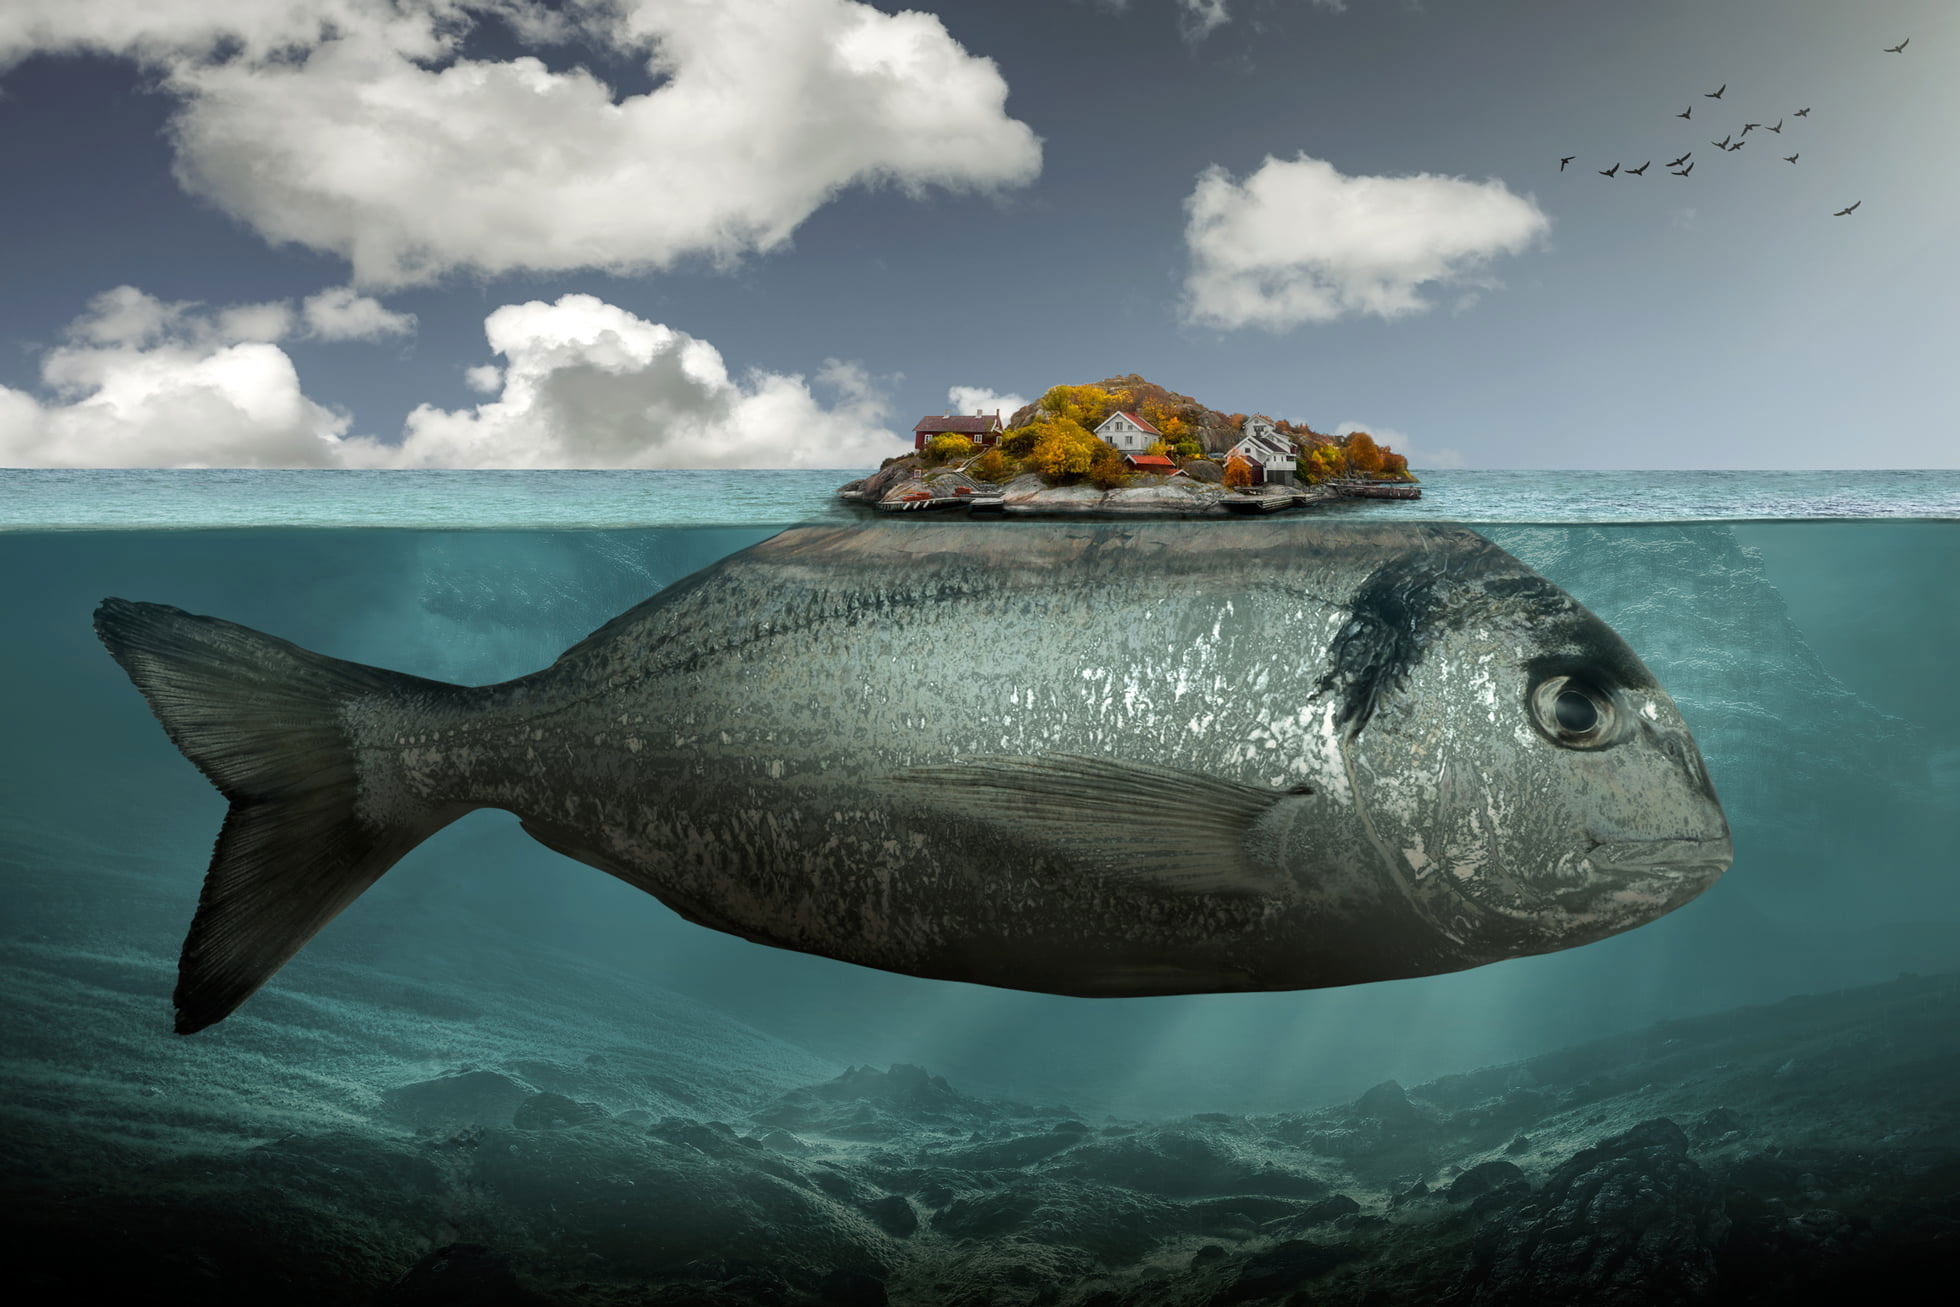 Gray fish illustration wallpaper, artwork, digital art, surreal, underwater